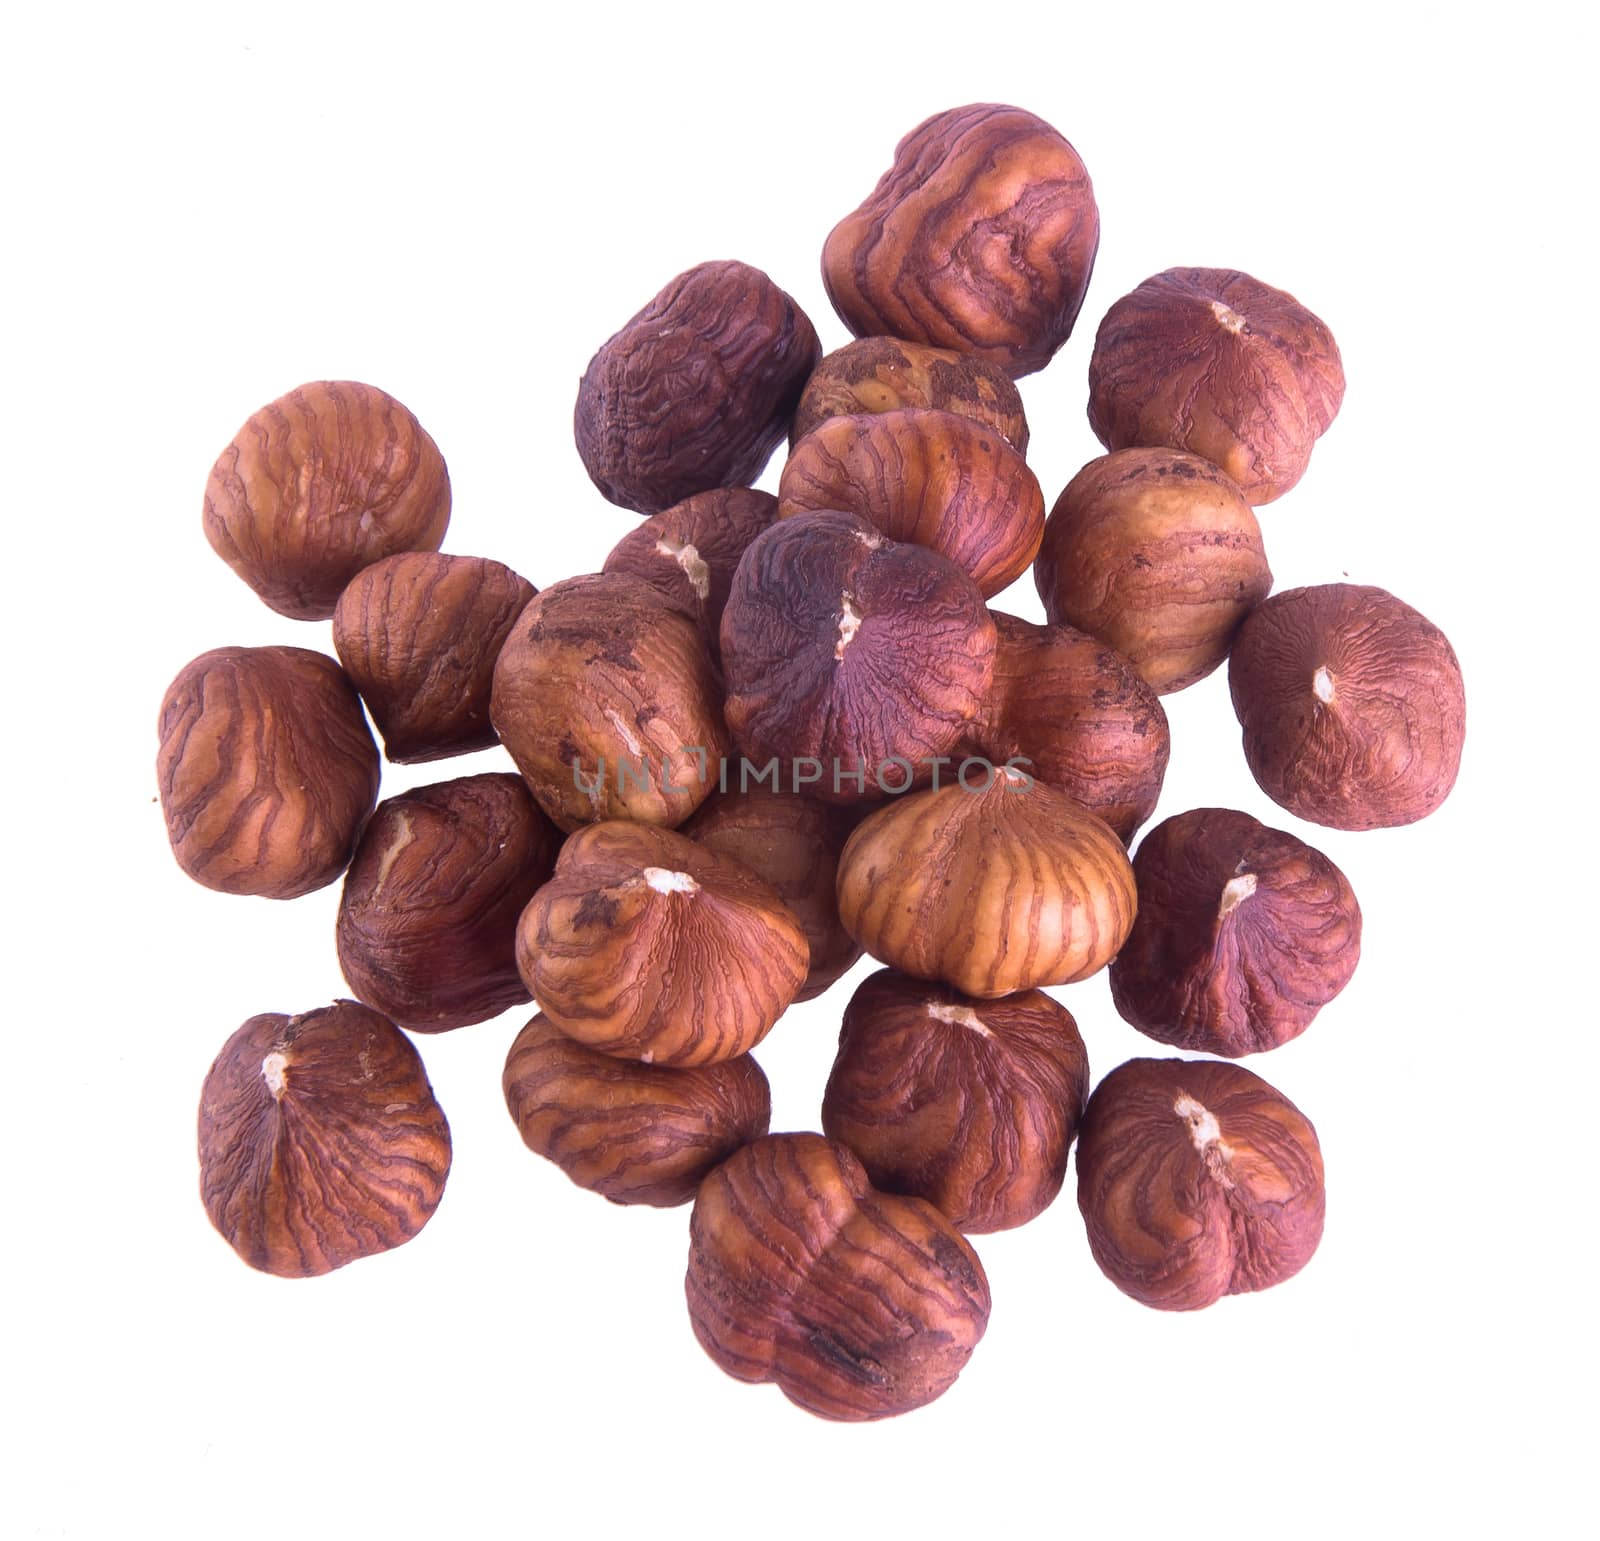 hazelnuts. hazelnuts on the background by heinteh